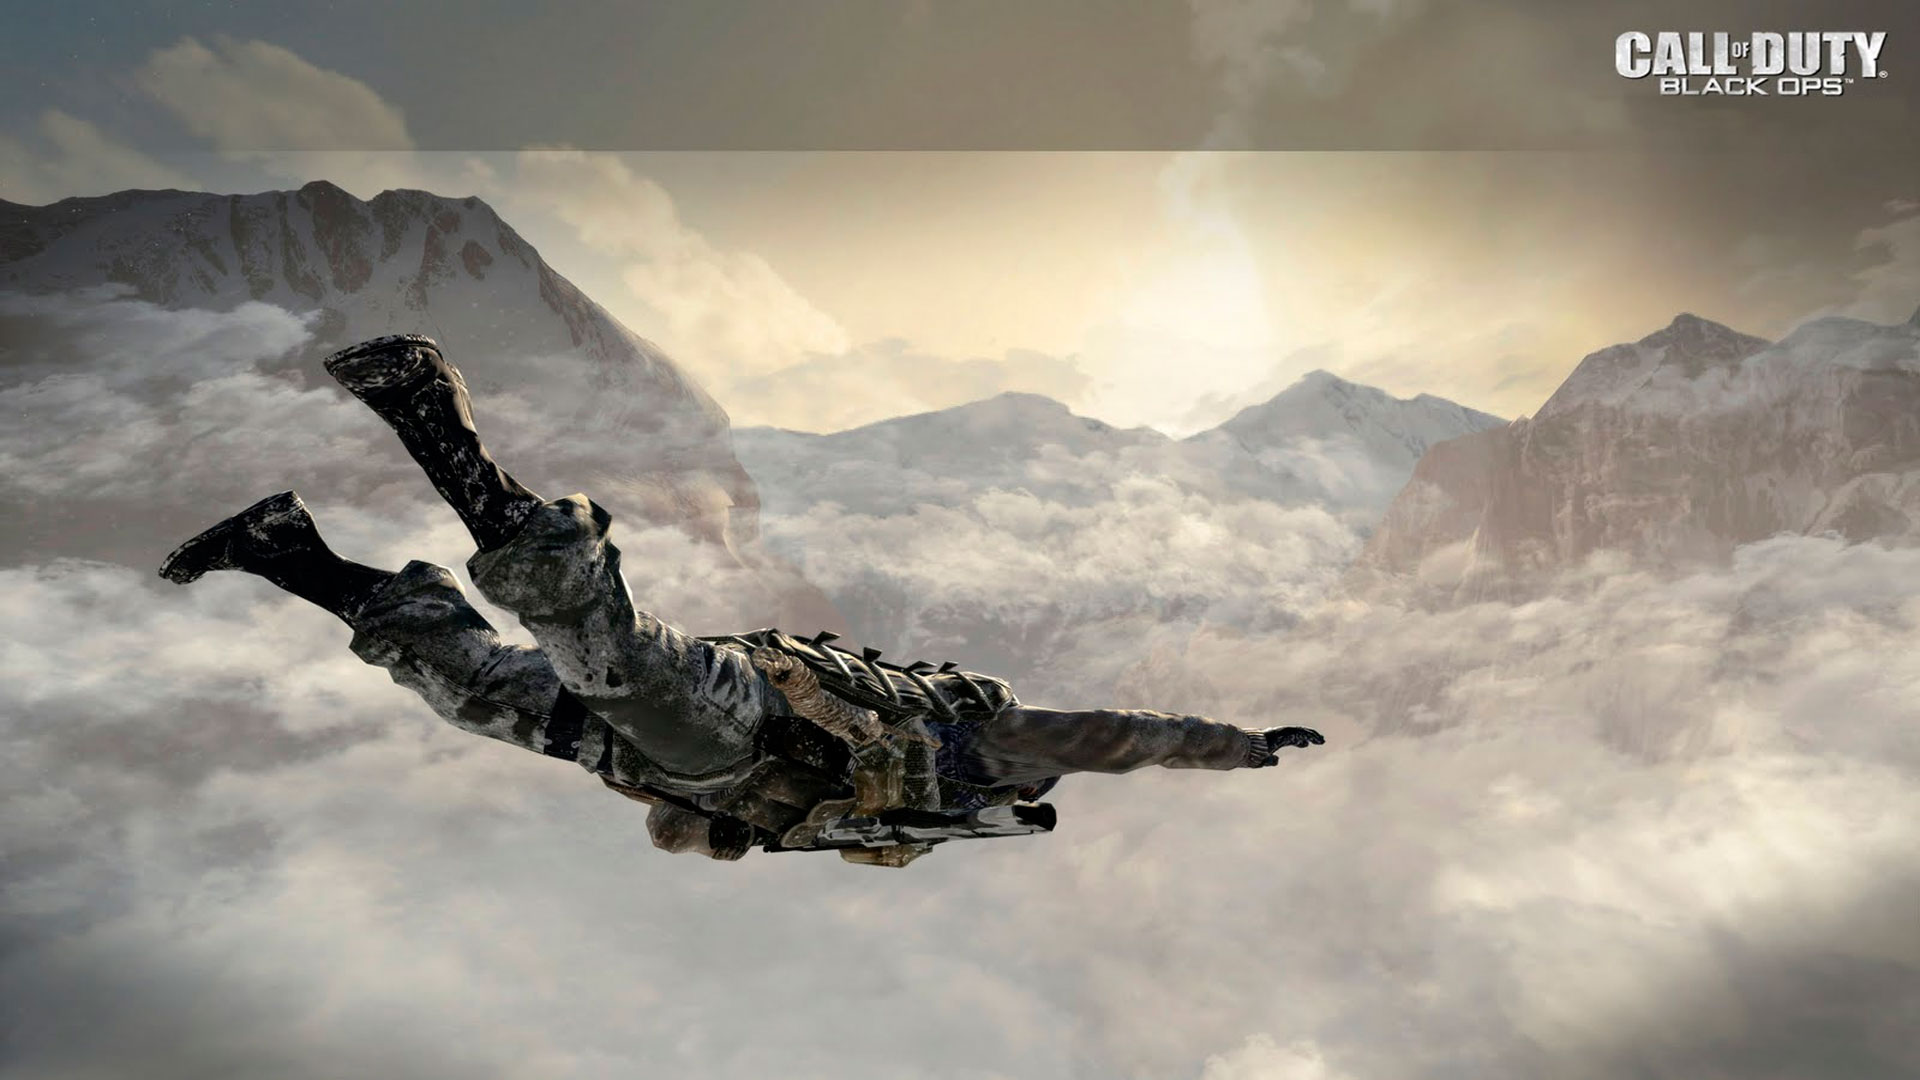 Duty Black Ops 1080p Wallpaper Call Of 720p